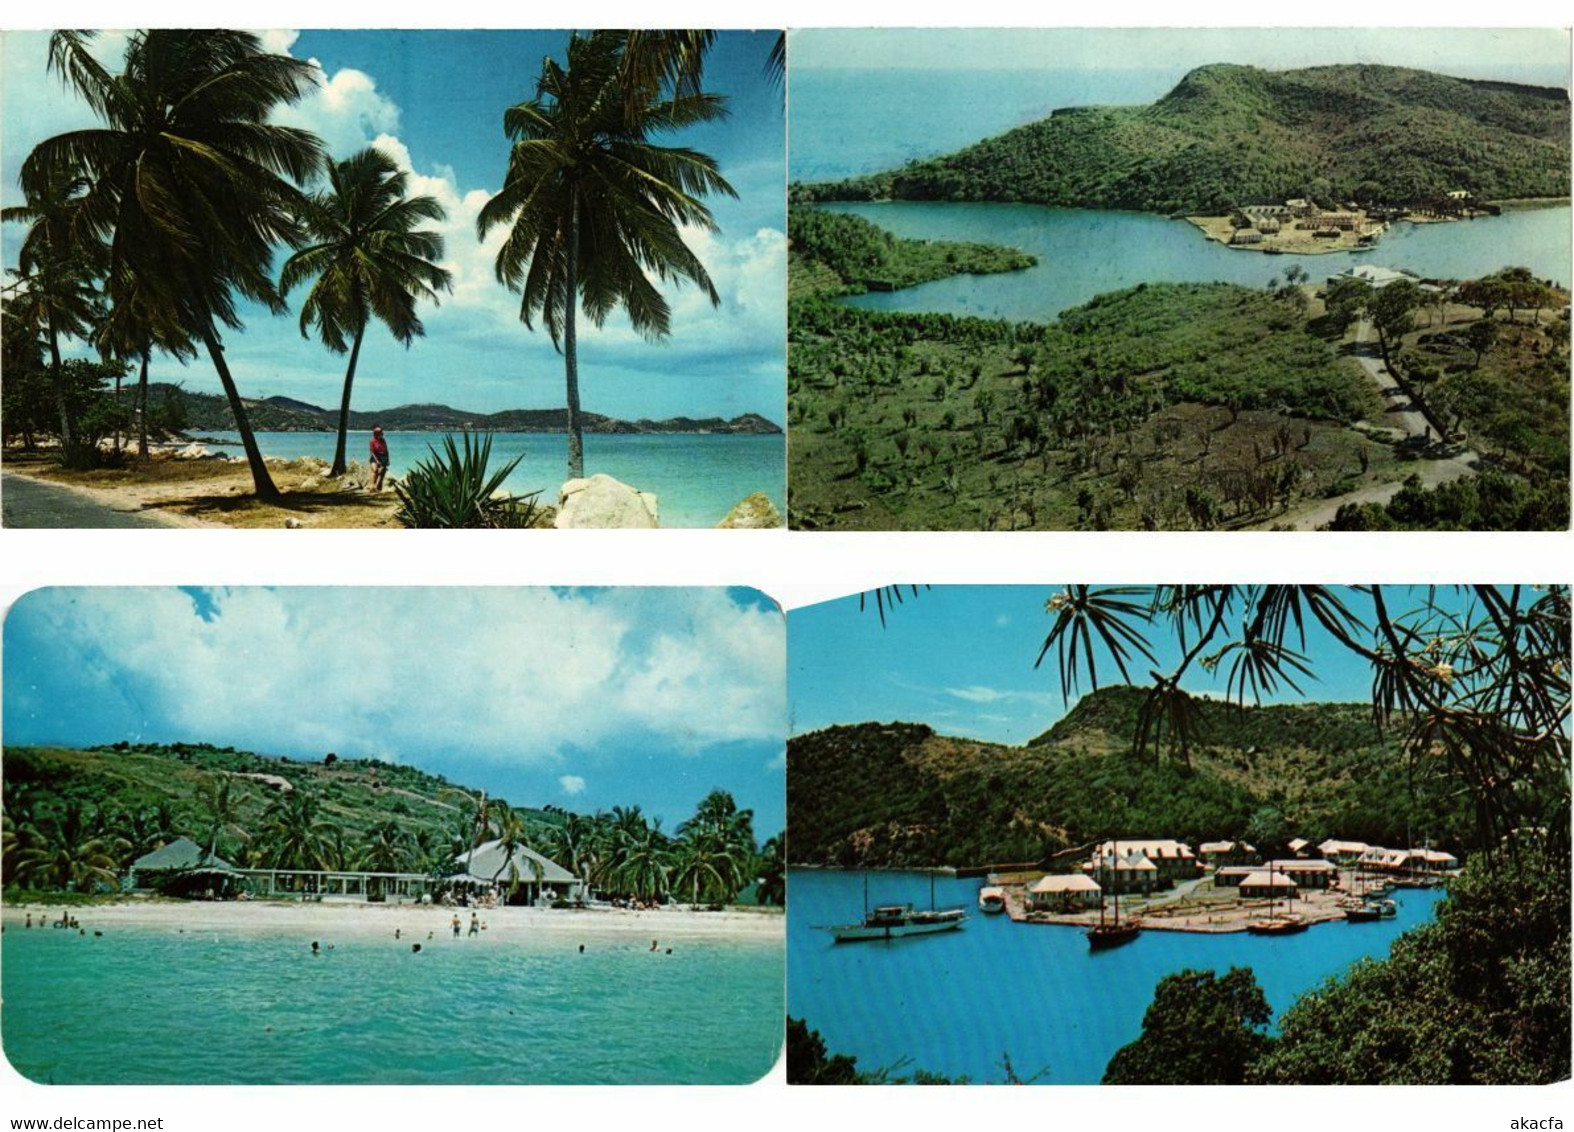 ANTIGUA BRITISH WEST INDIES CARIBBEAN 15 Vintage Postcards Pre-1970 (L2681) - Antigua & Barbuda